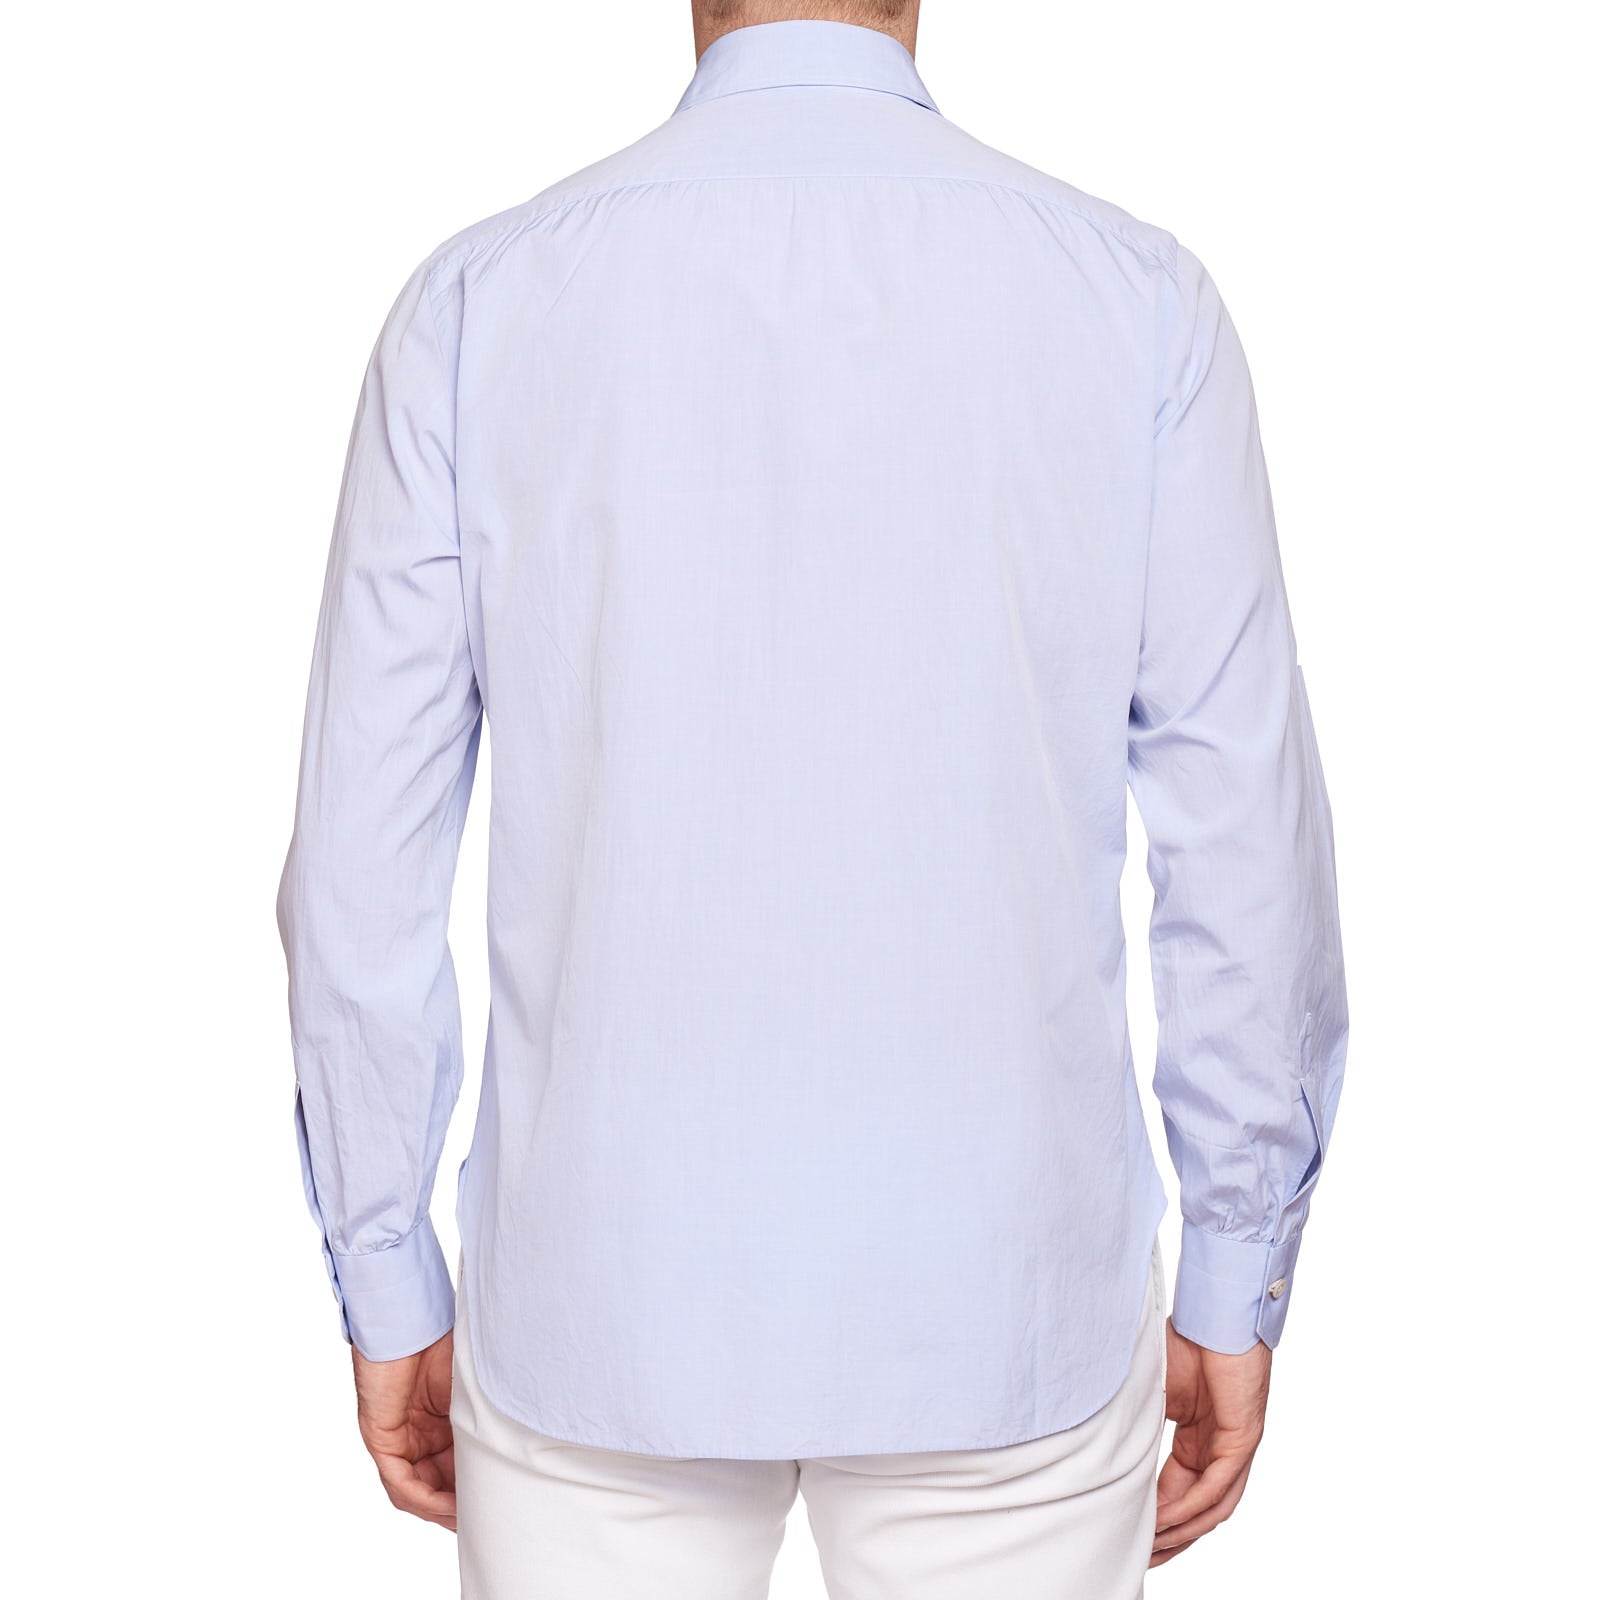 KITON Napoli Handmade Bespoke Light Blue Poplin Cotton Dress Shirt EU 40 US 15.75 KITON